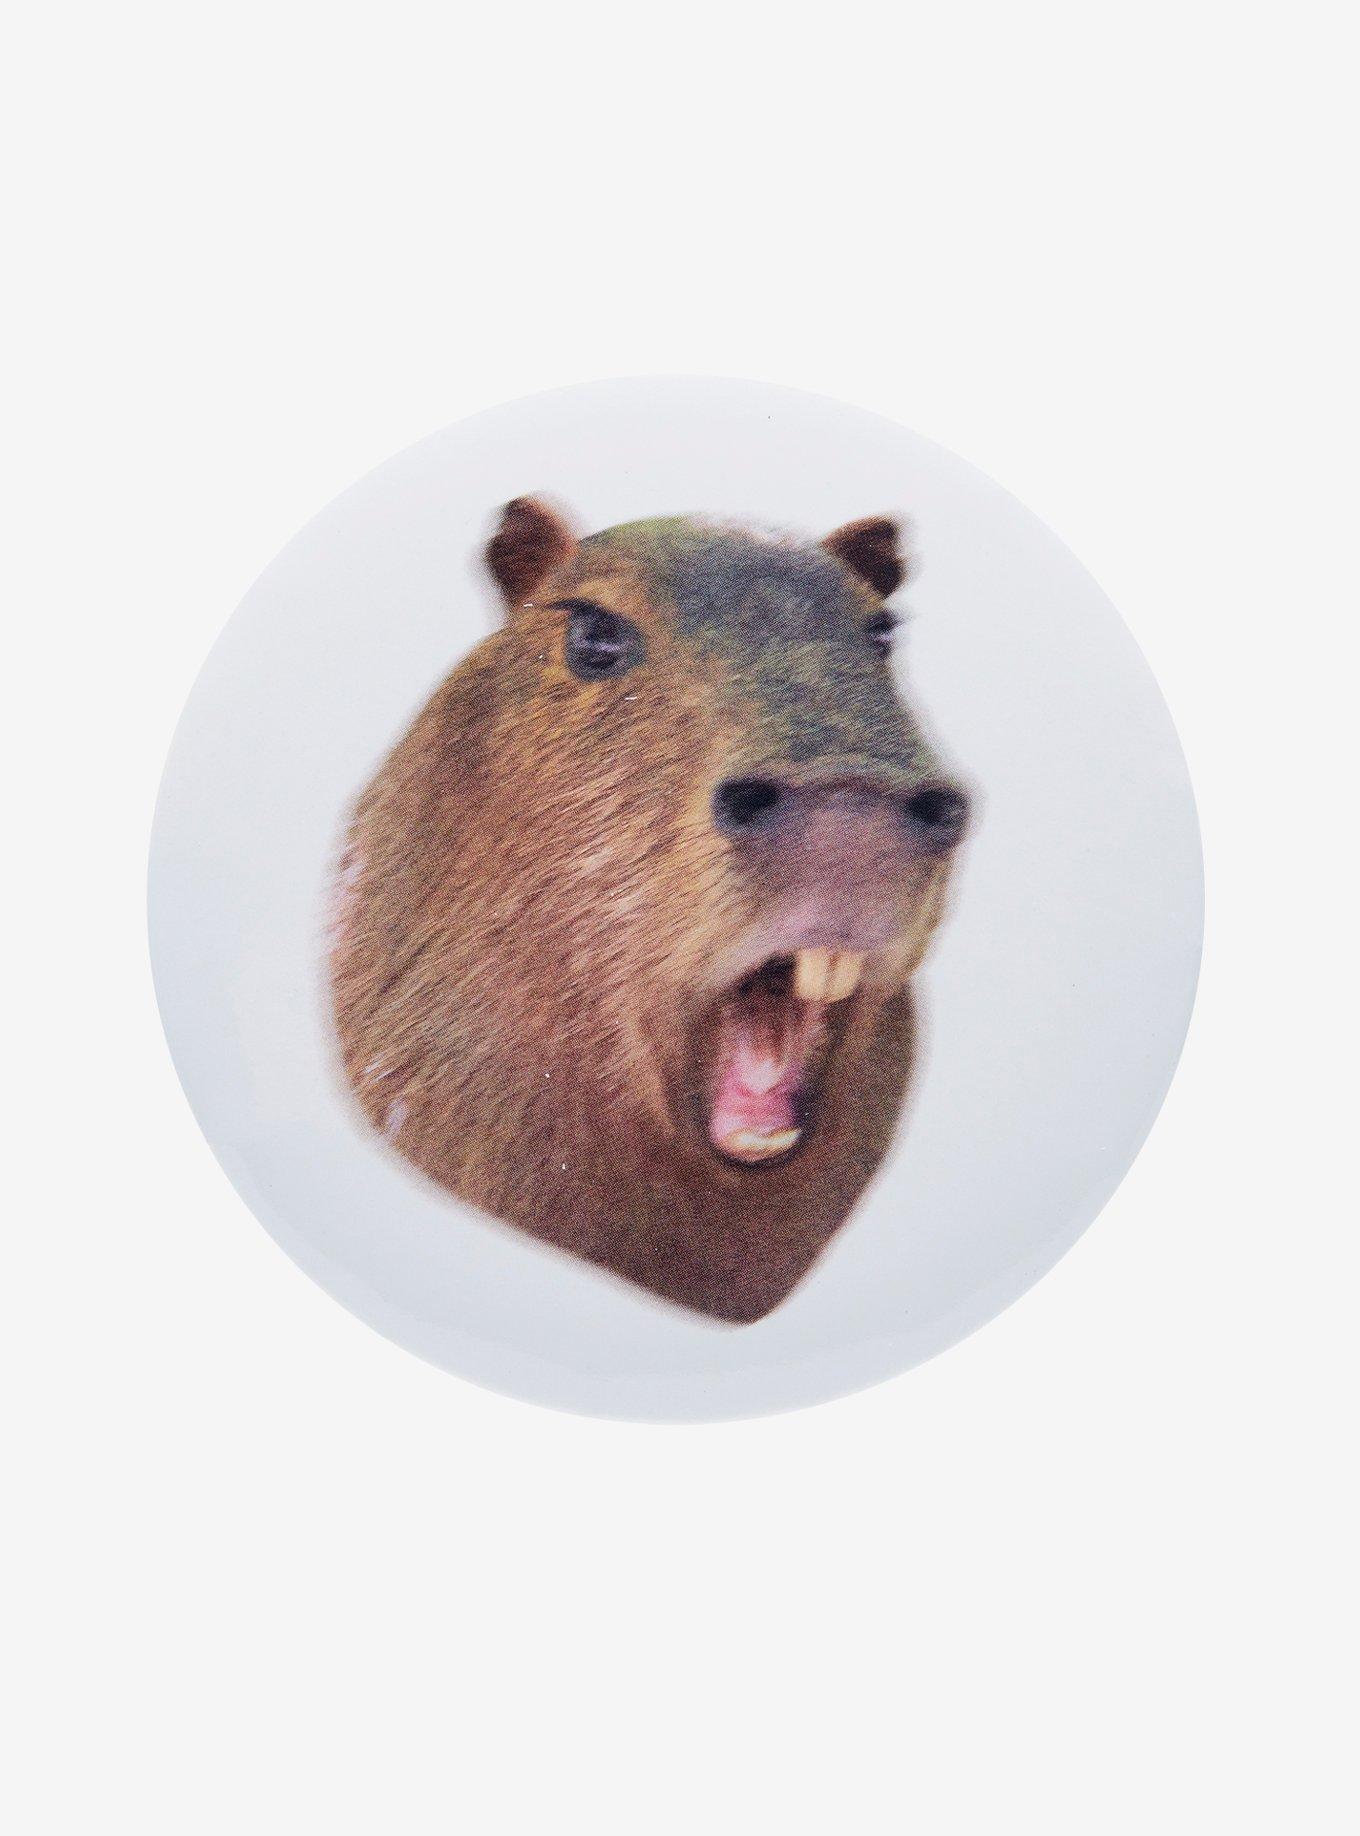 minions song by Capybaramaster Sound Effect - Meme Button - Tuna